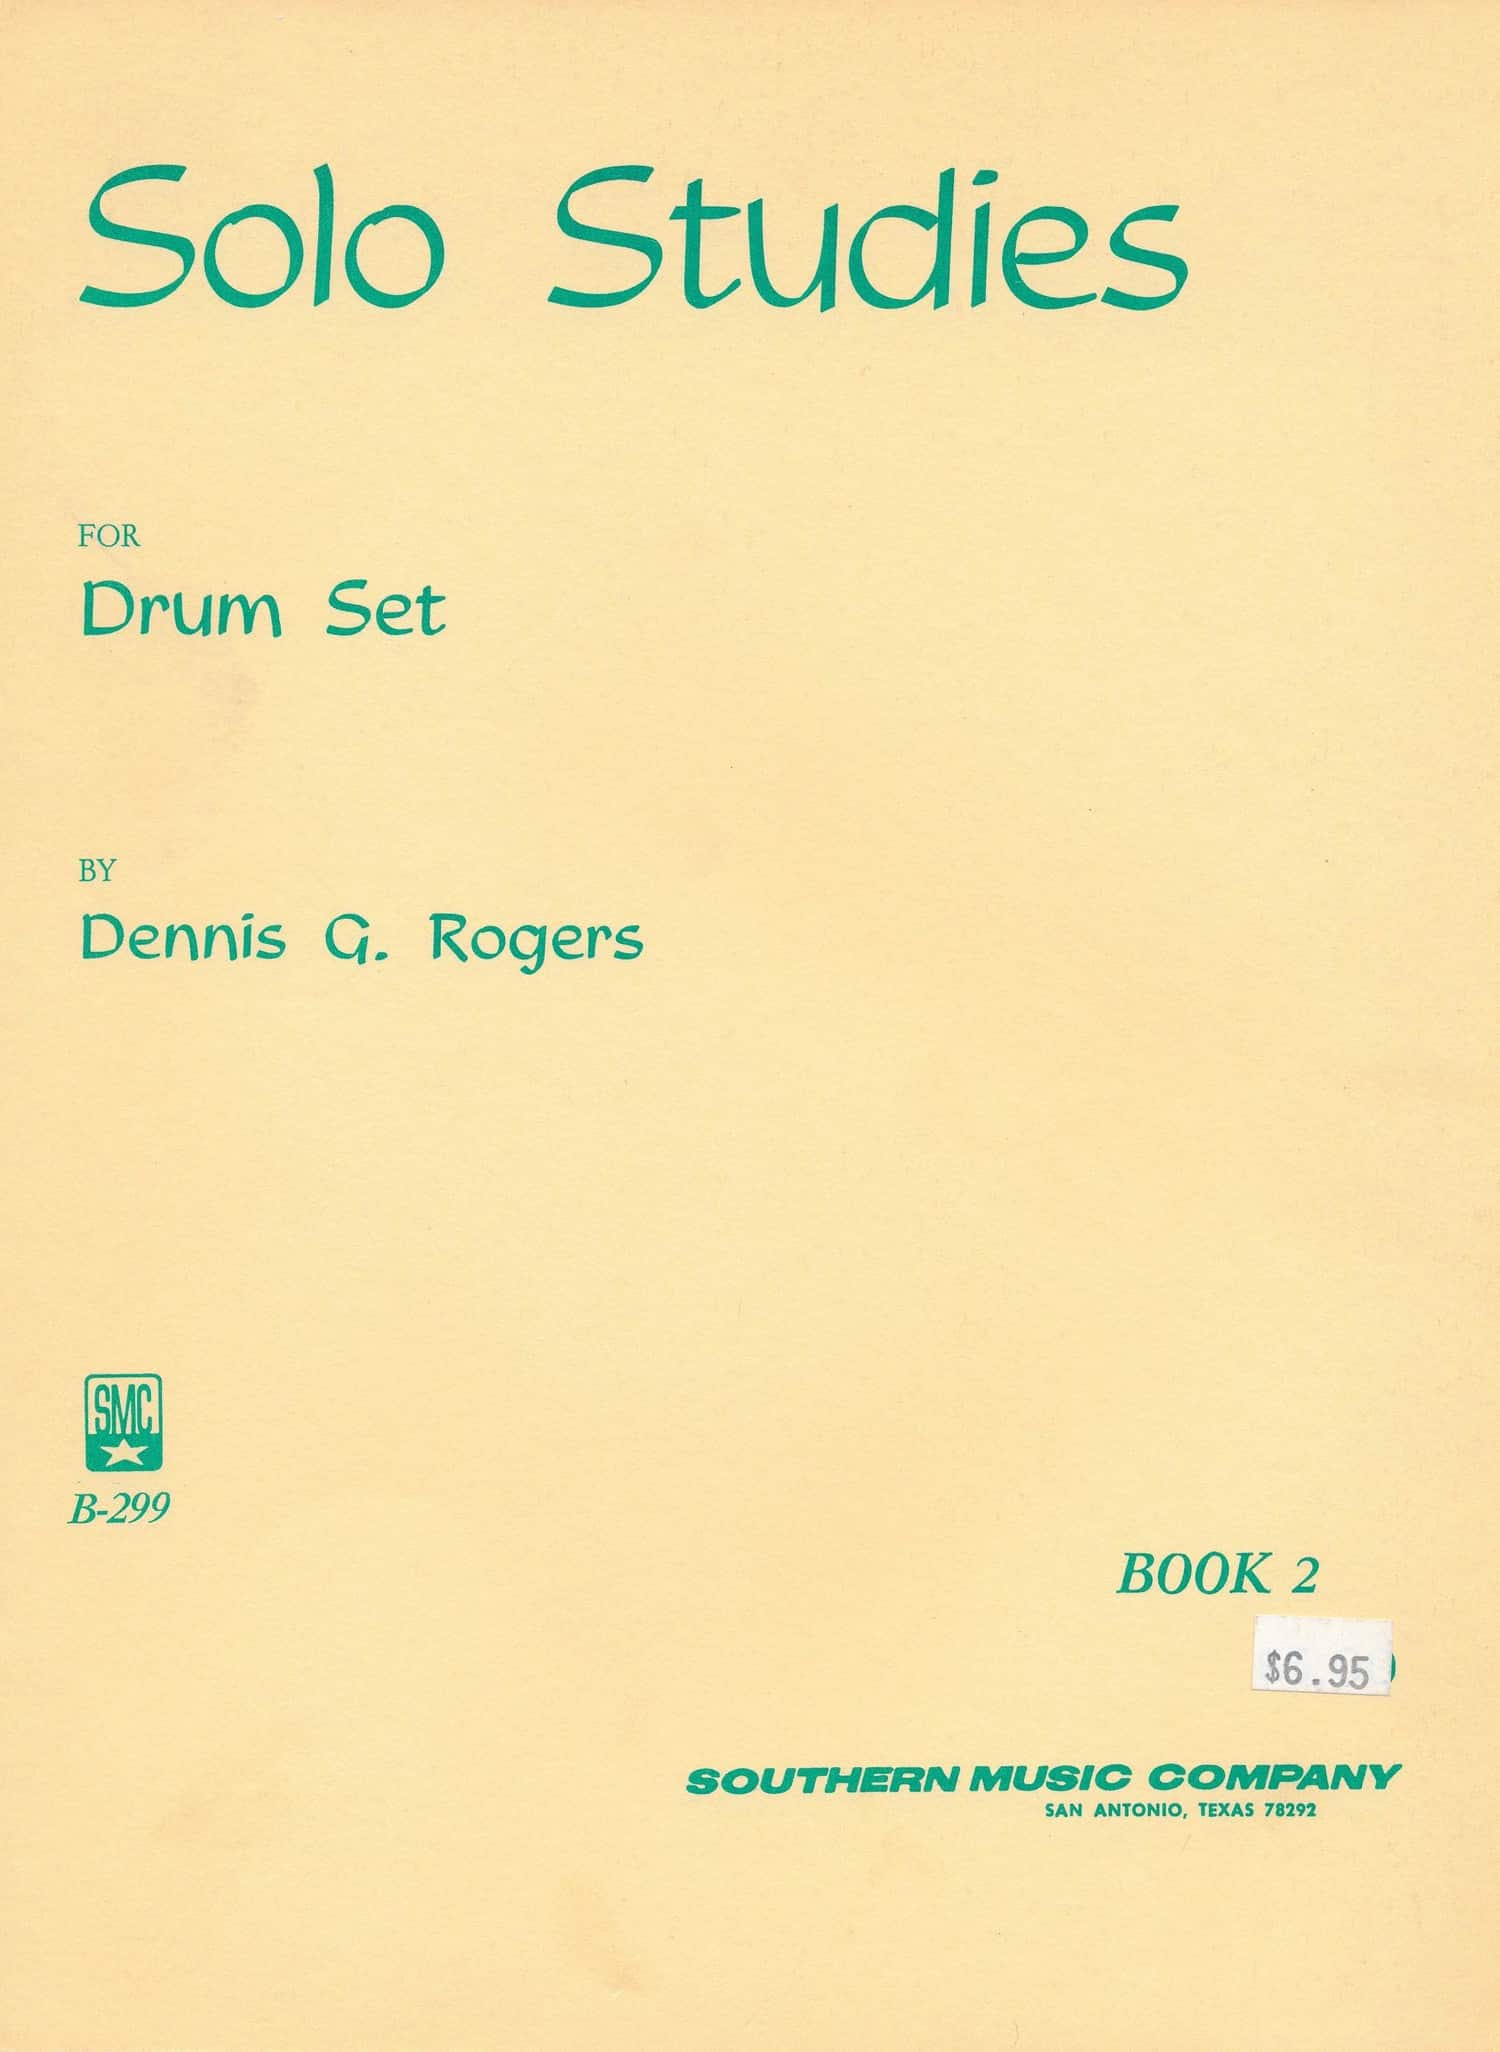 Solo Studies for Drum Set - book 2